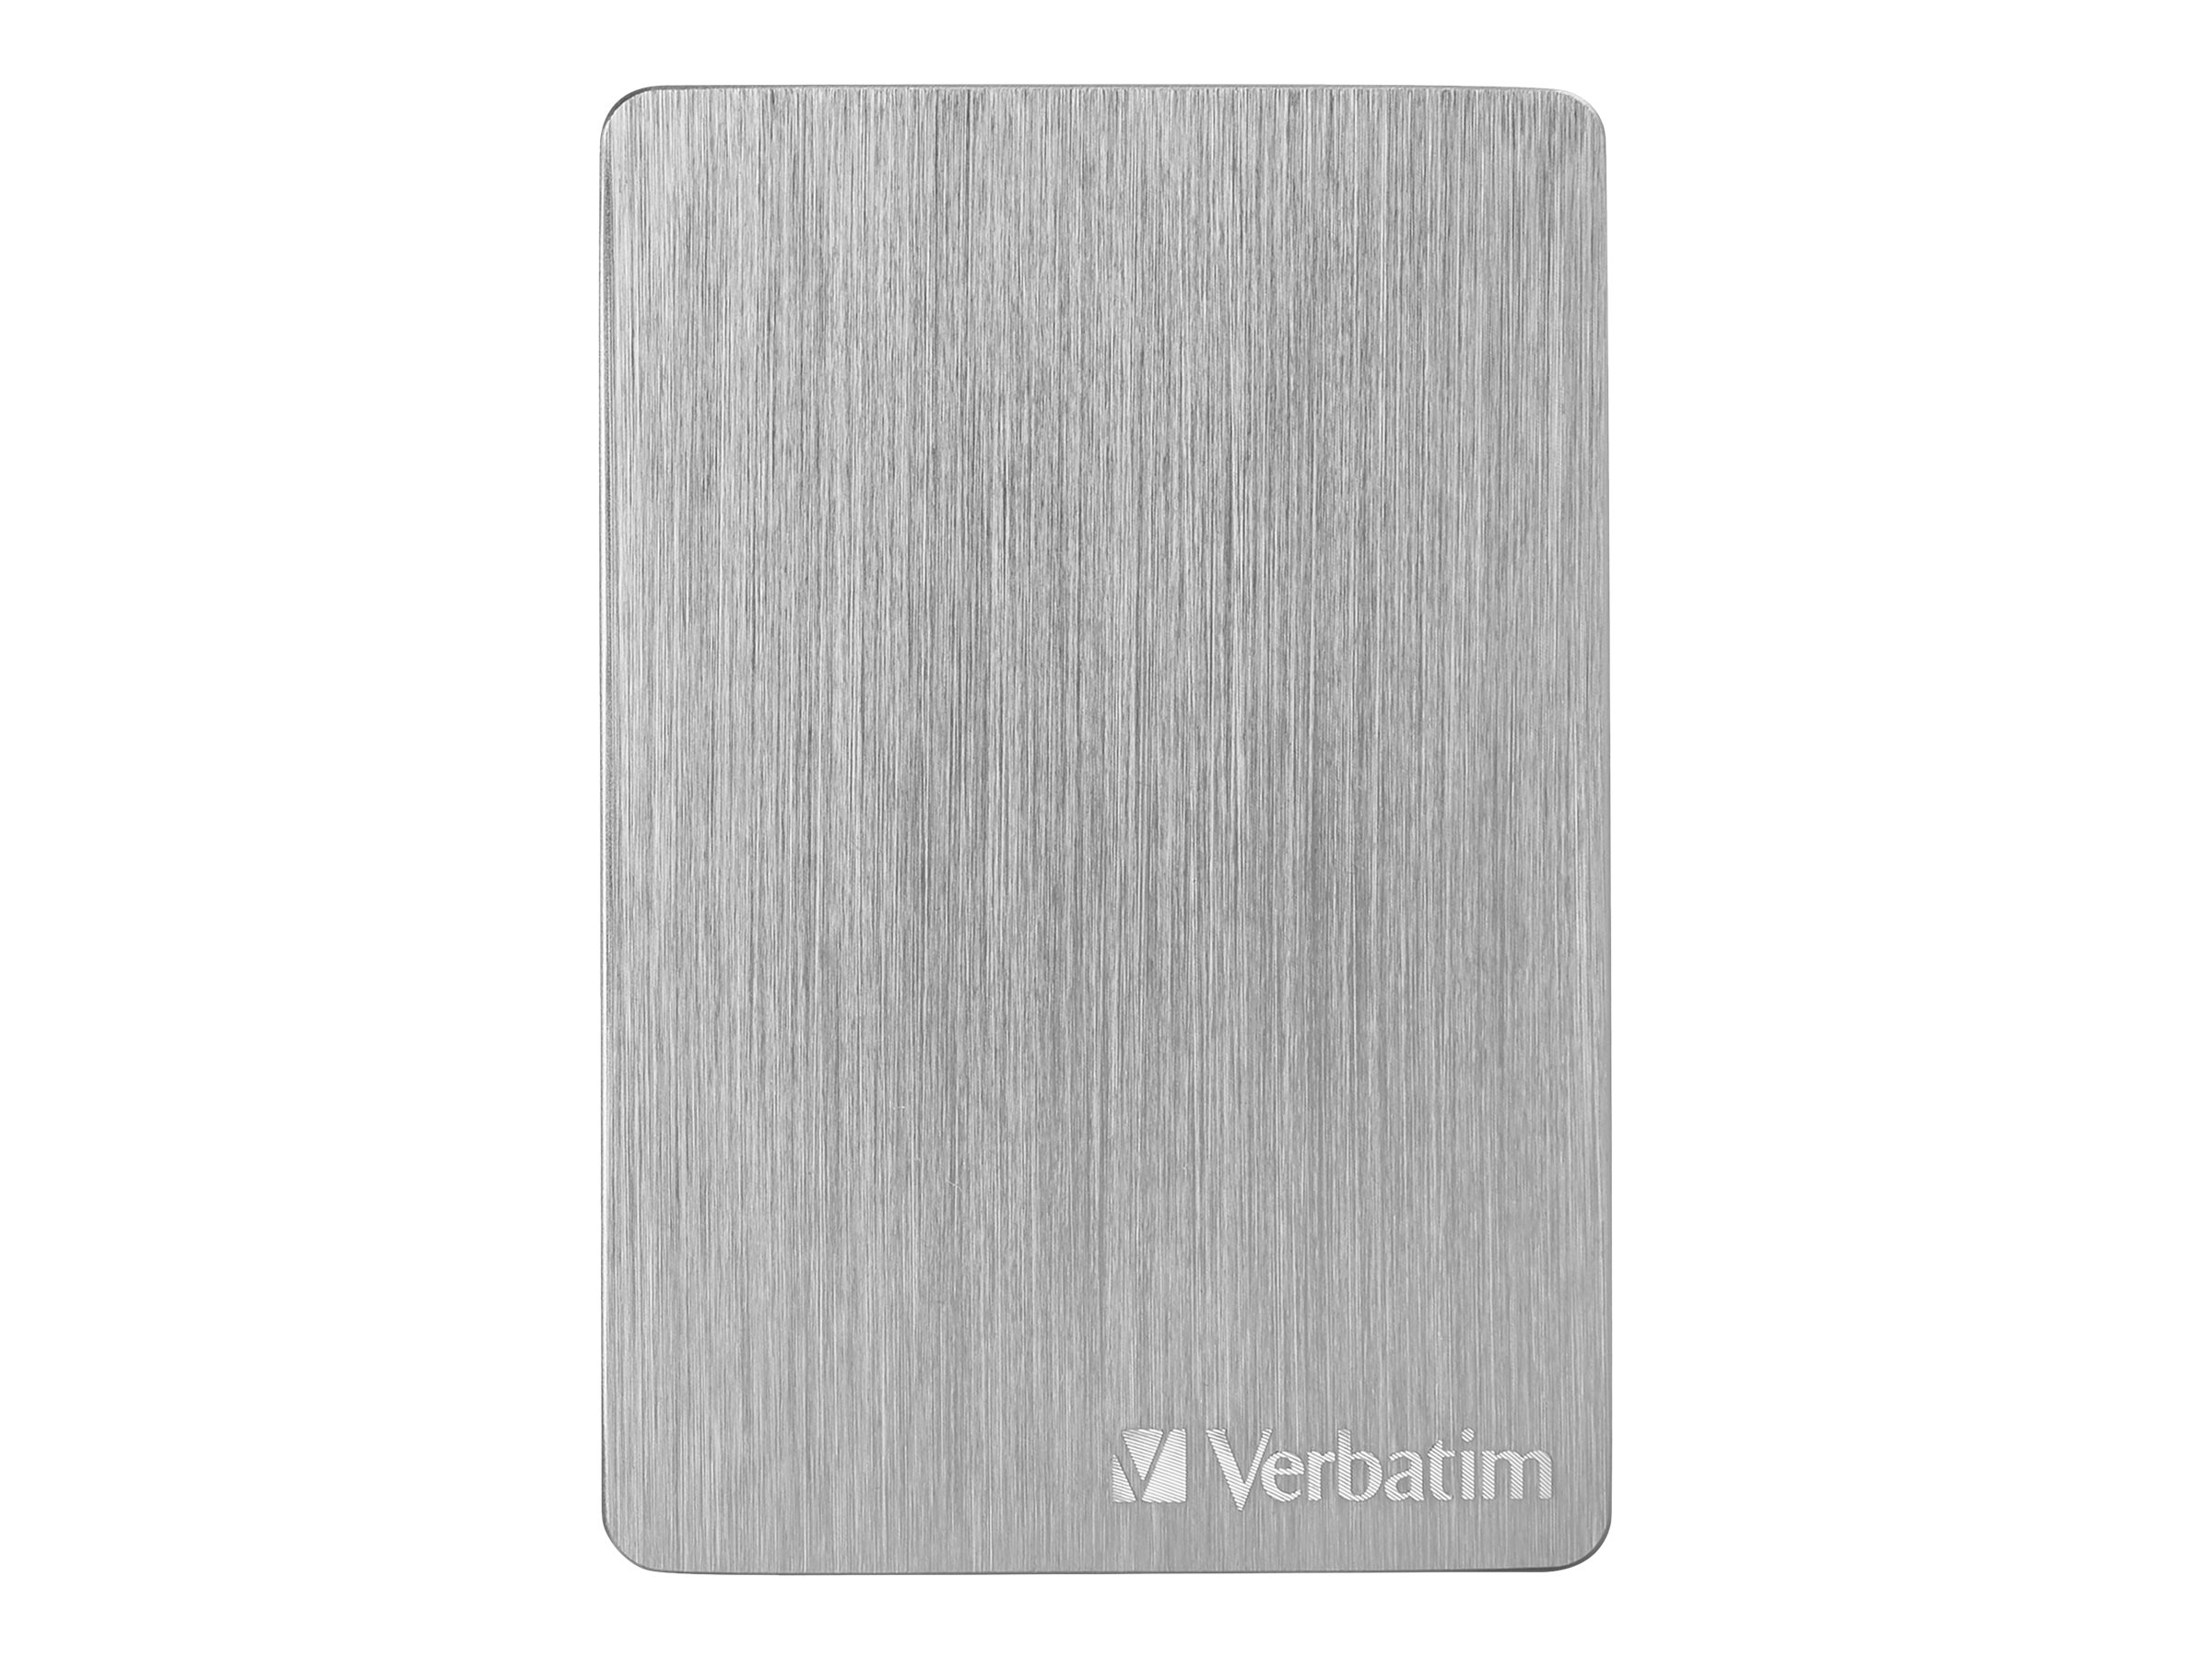 Verbatim Store 'n' Go ALU Slim - Festplatte - 1 TB - extern (tragbar)